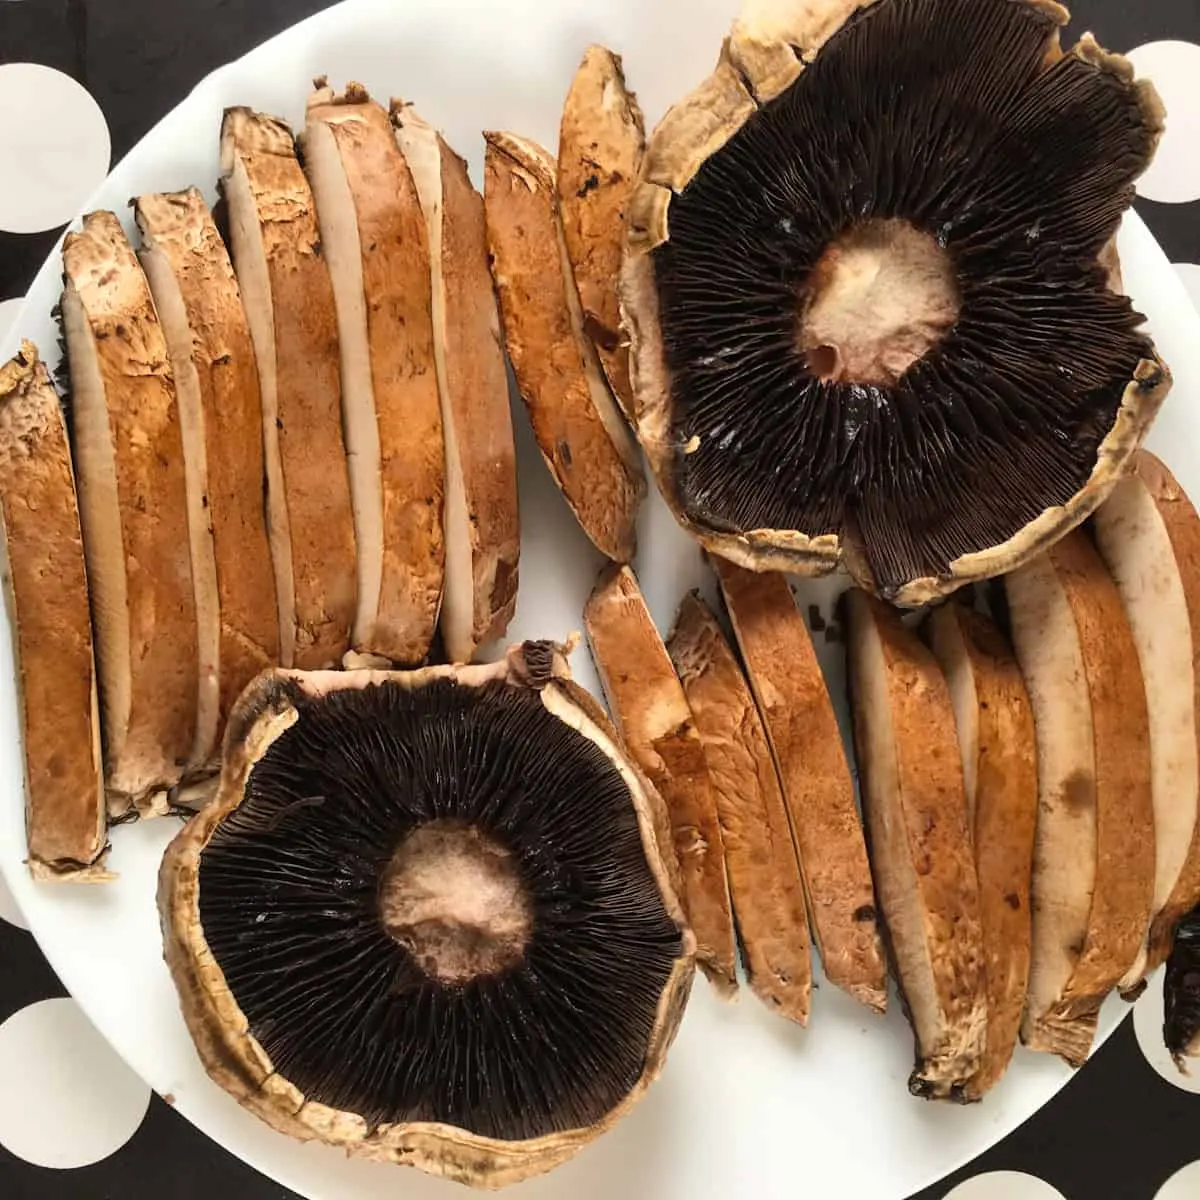 smoked portobello mushrooms traeger - What temperature do you roast portobello mushrooms